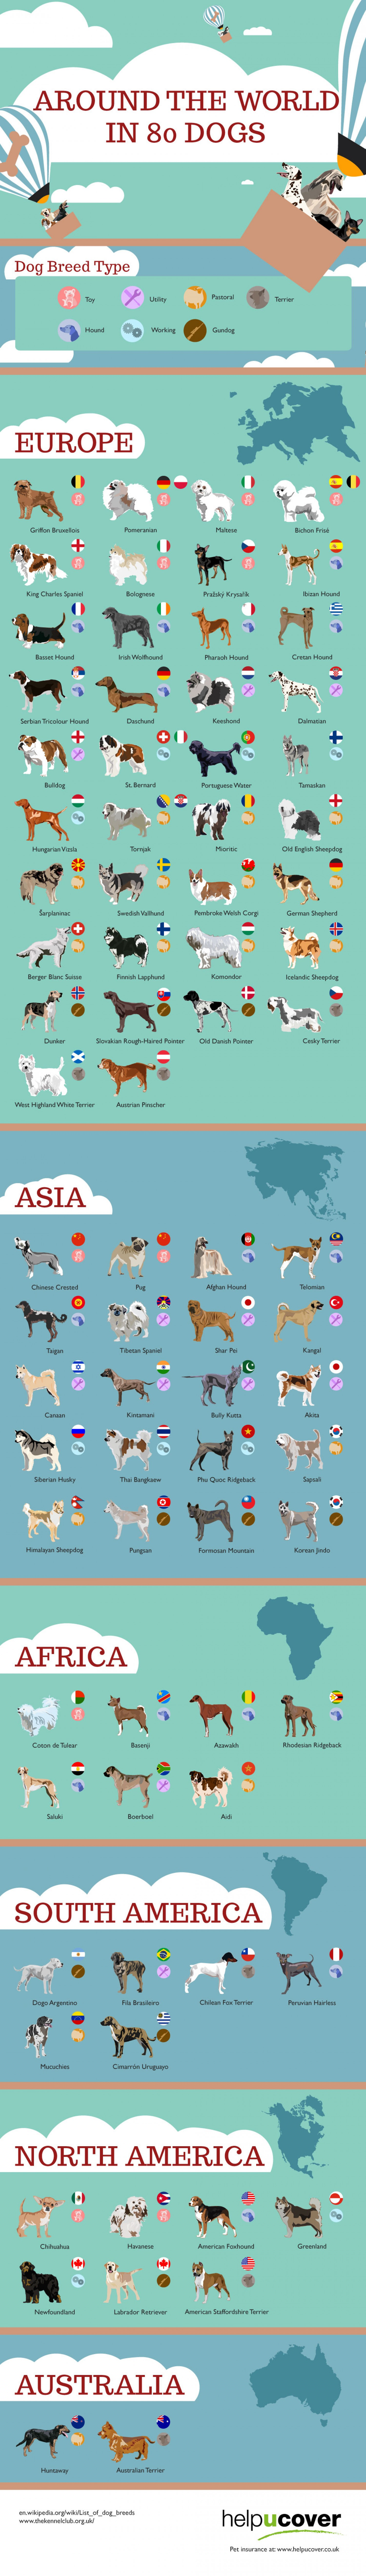 around-the-world-in-80-dogs_538dd48784b3a_w1500